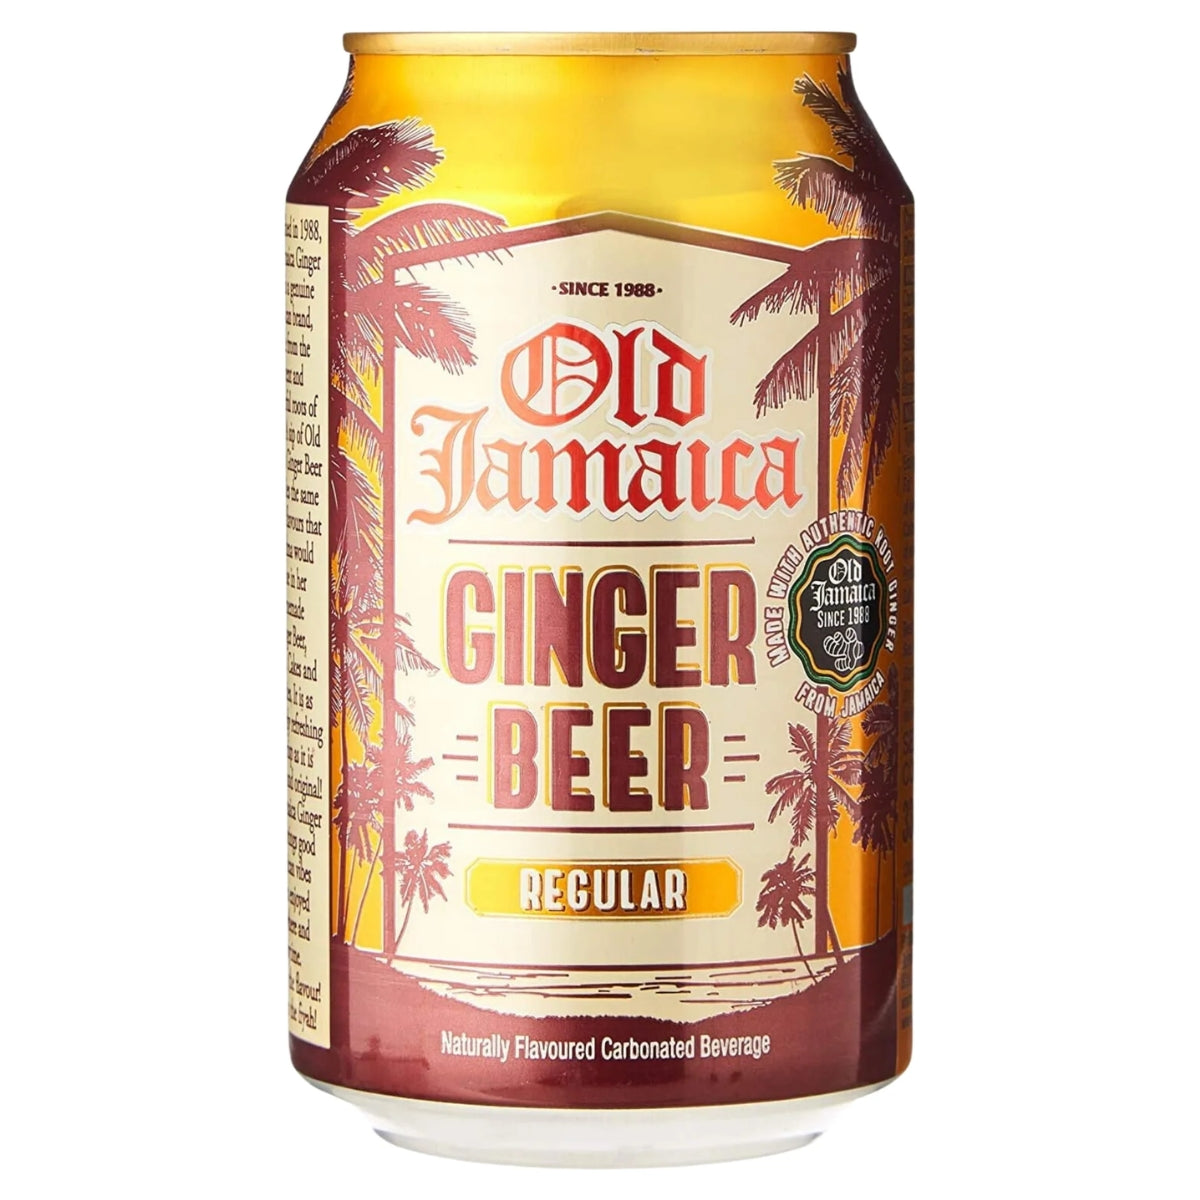 Old Jamaica - Ginger Beer Regular - 330ml.